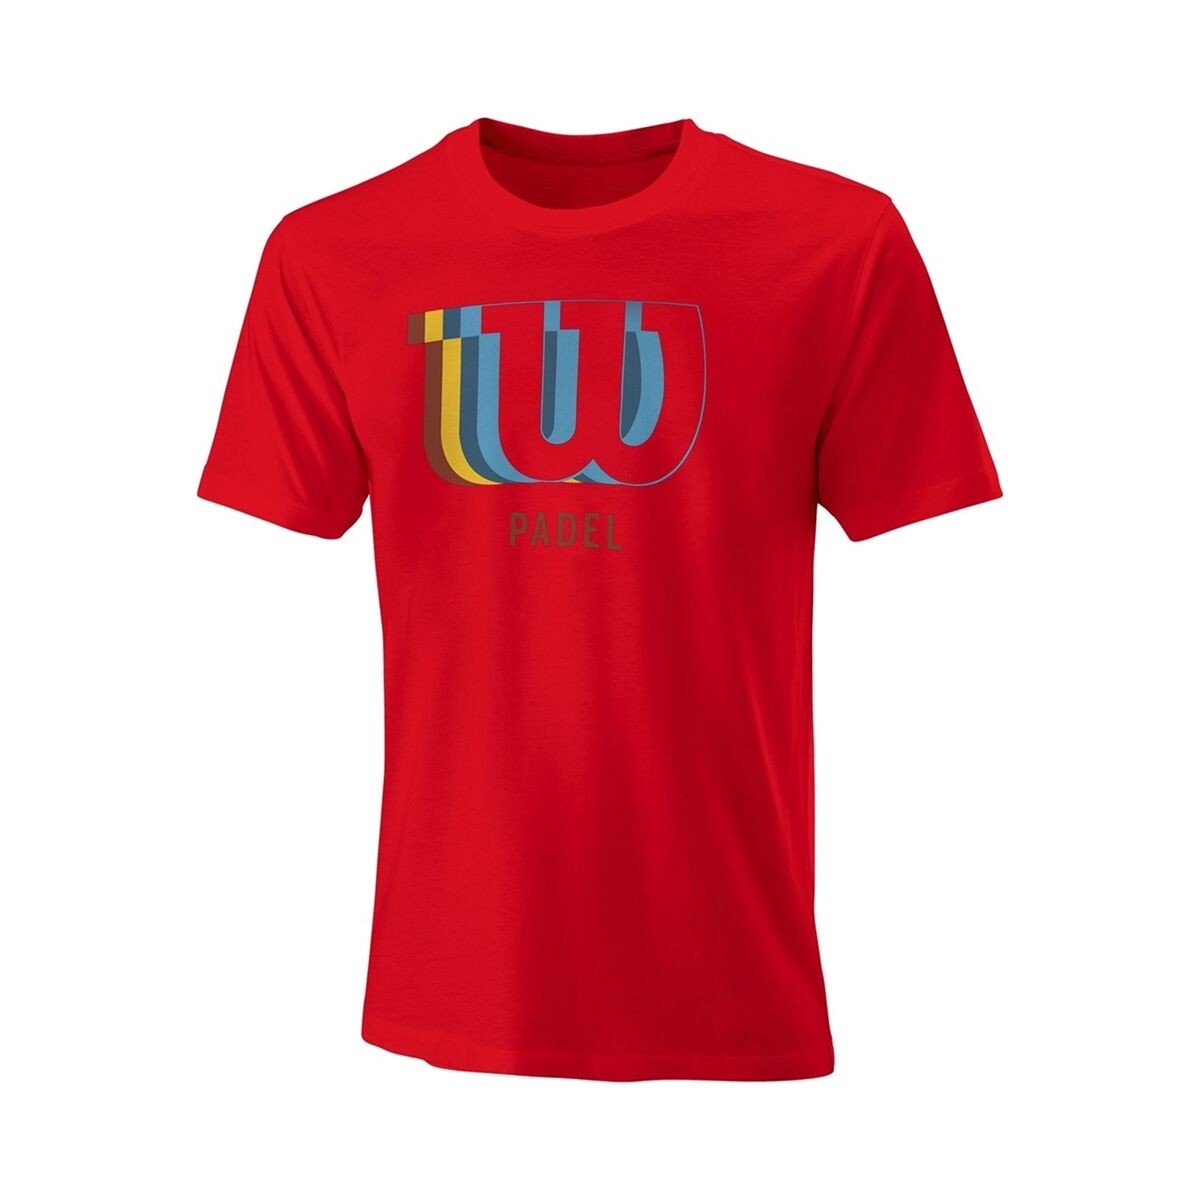 Wilson Mens Padel Blur Tech T-shirt Red S